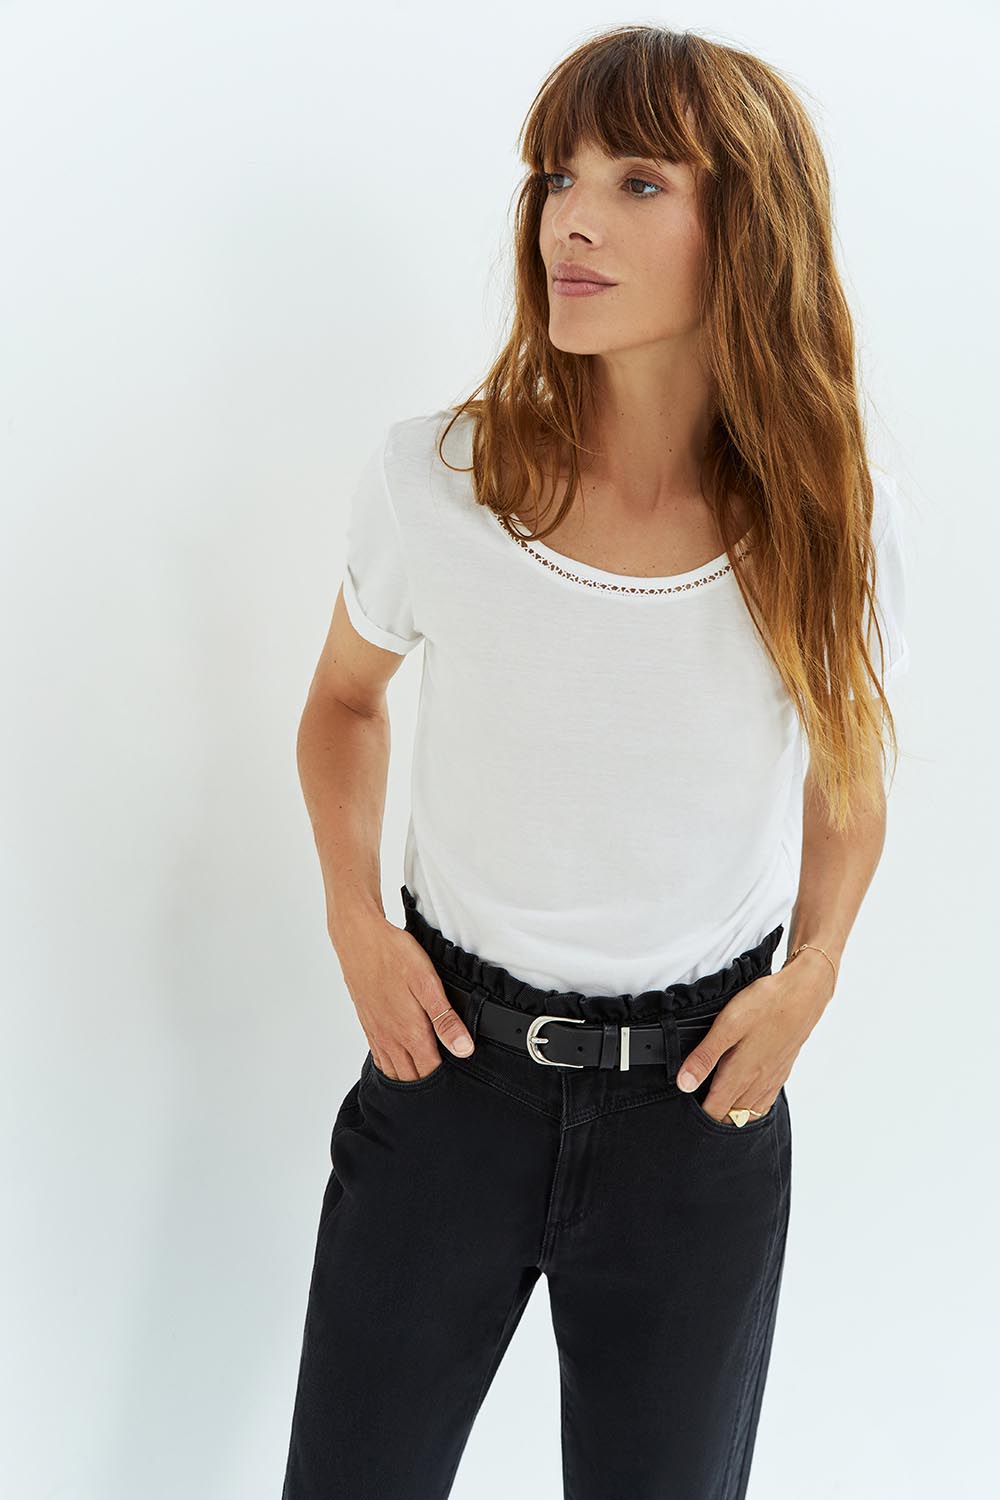 MYSTY - T-shirt blanc coton bio avec galon broderie